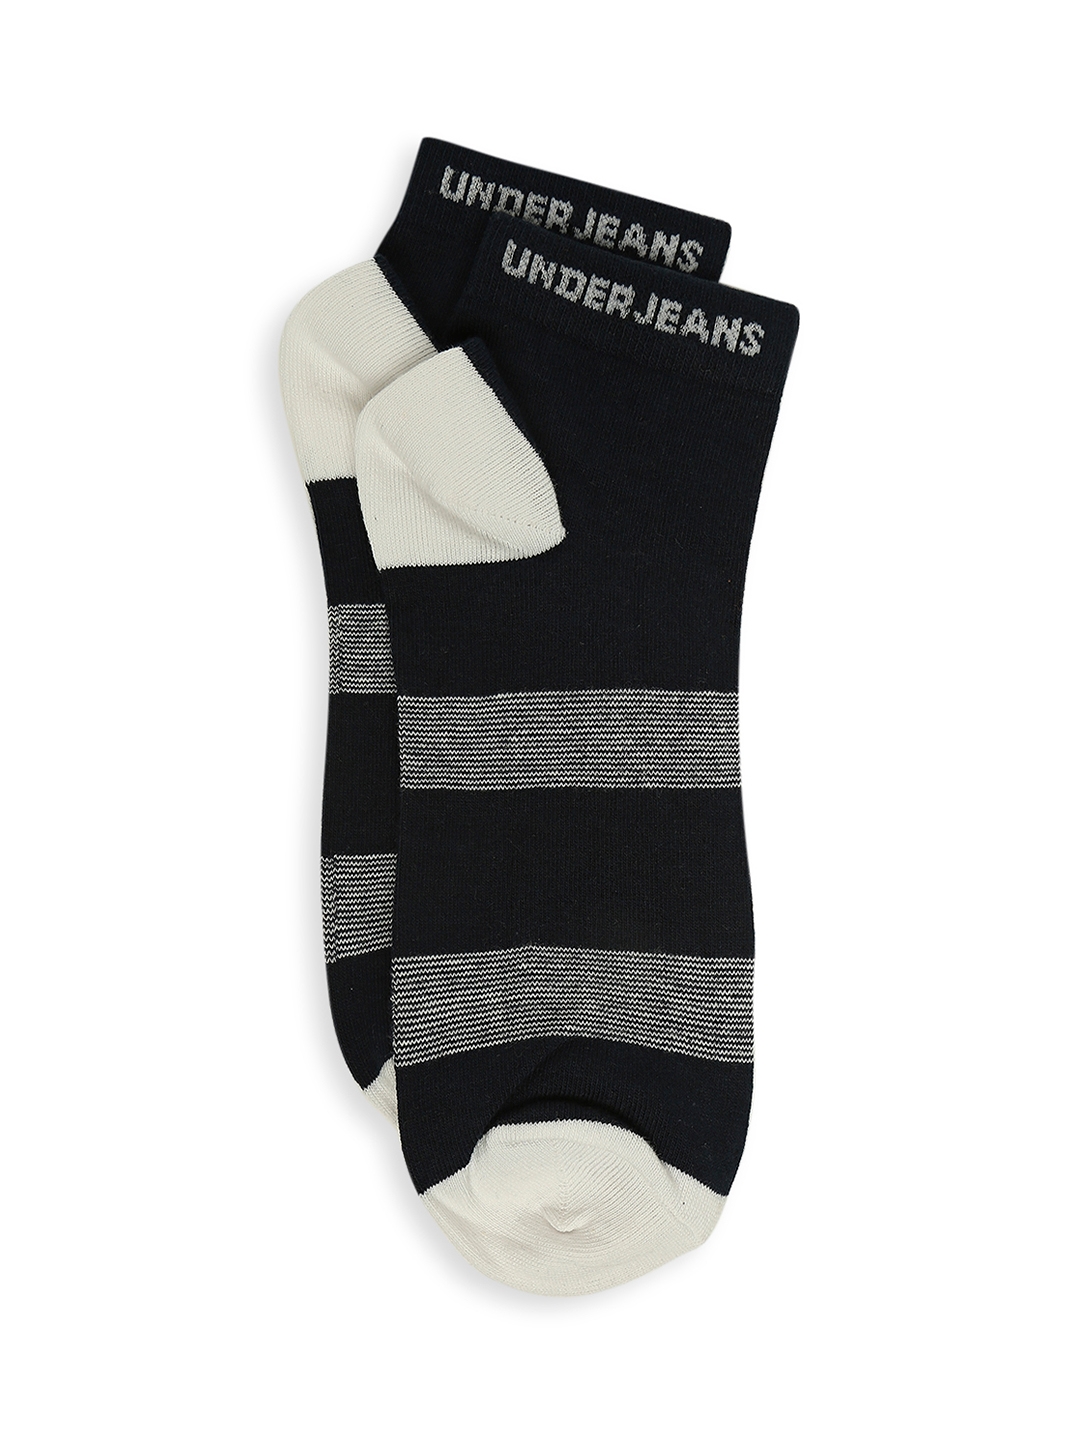 spykar | Underjeans by Spykar Premium Dark Grey & Navy Ankle Length Socks - Pack Of 2 7